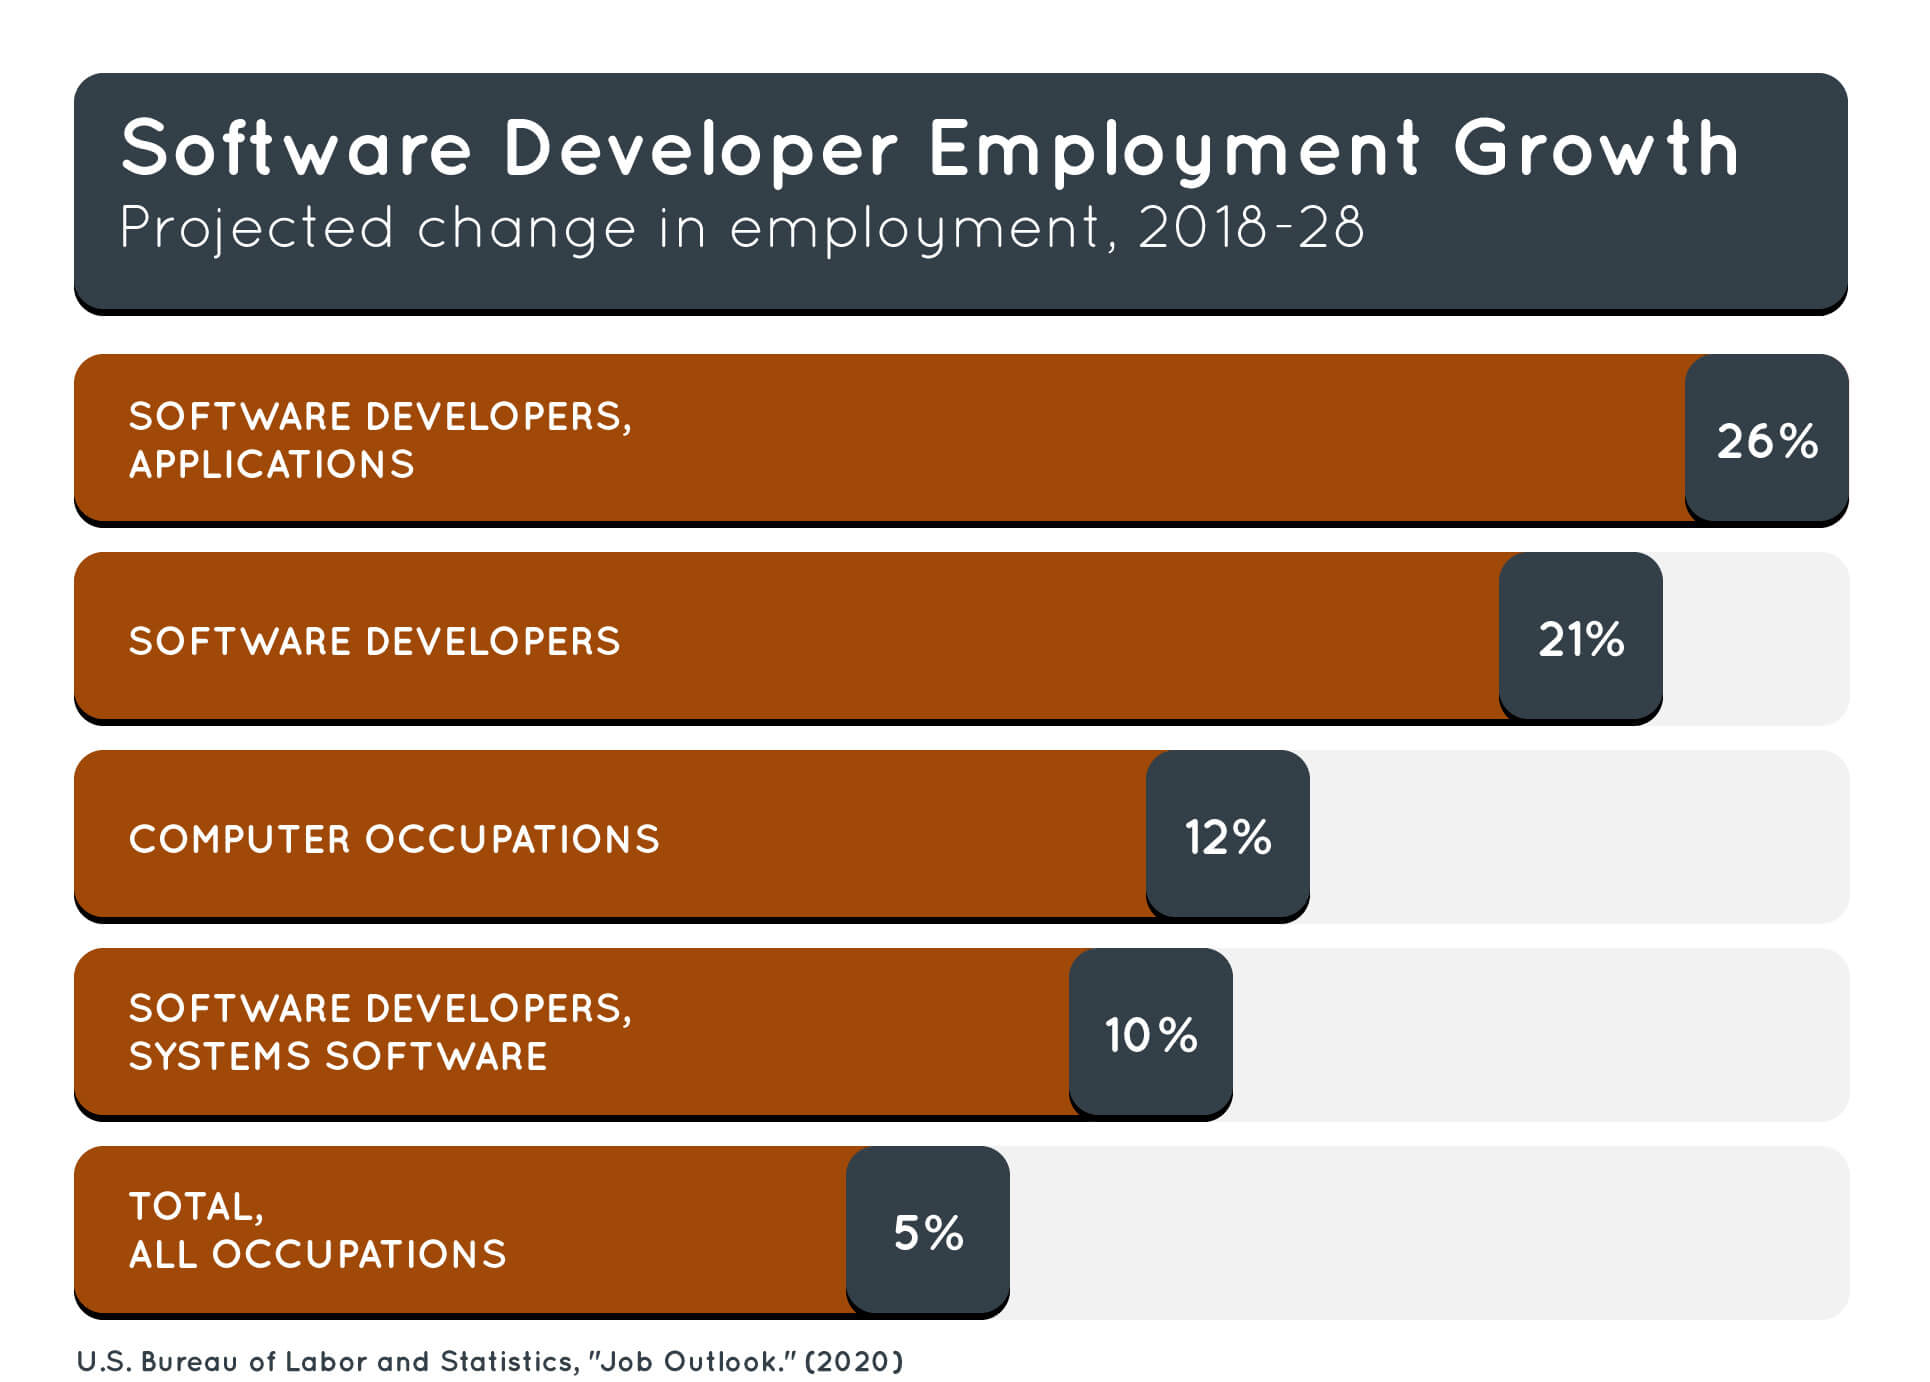 A graph showing software developer employment growth